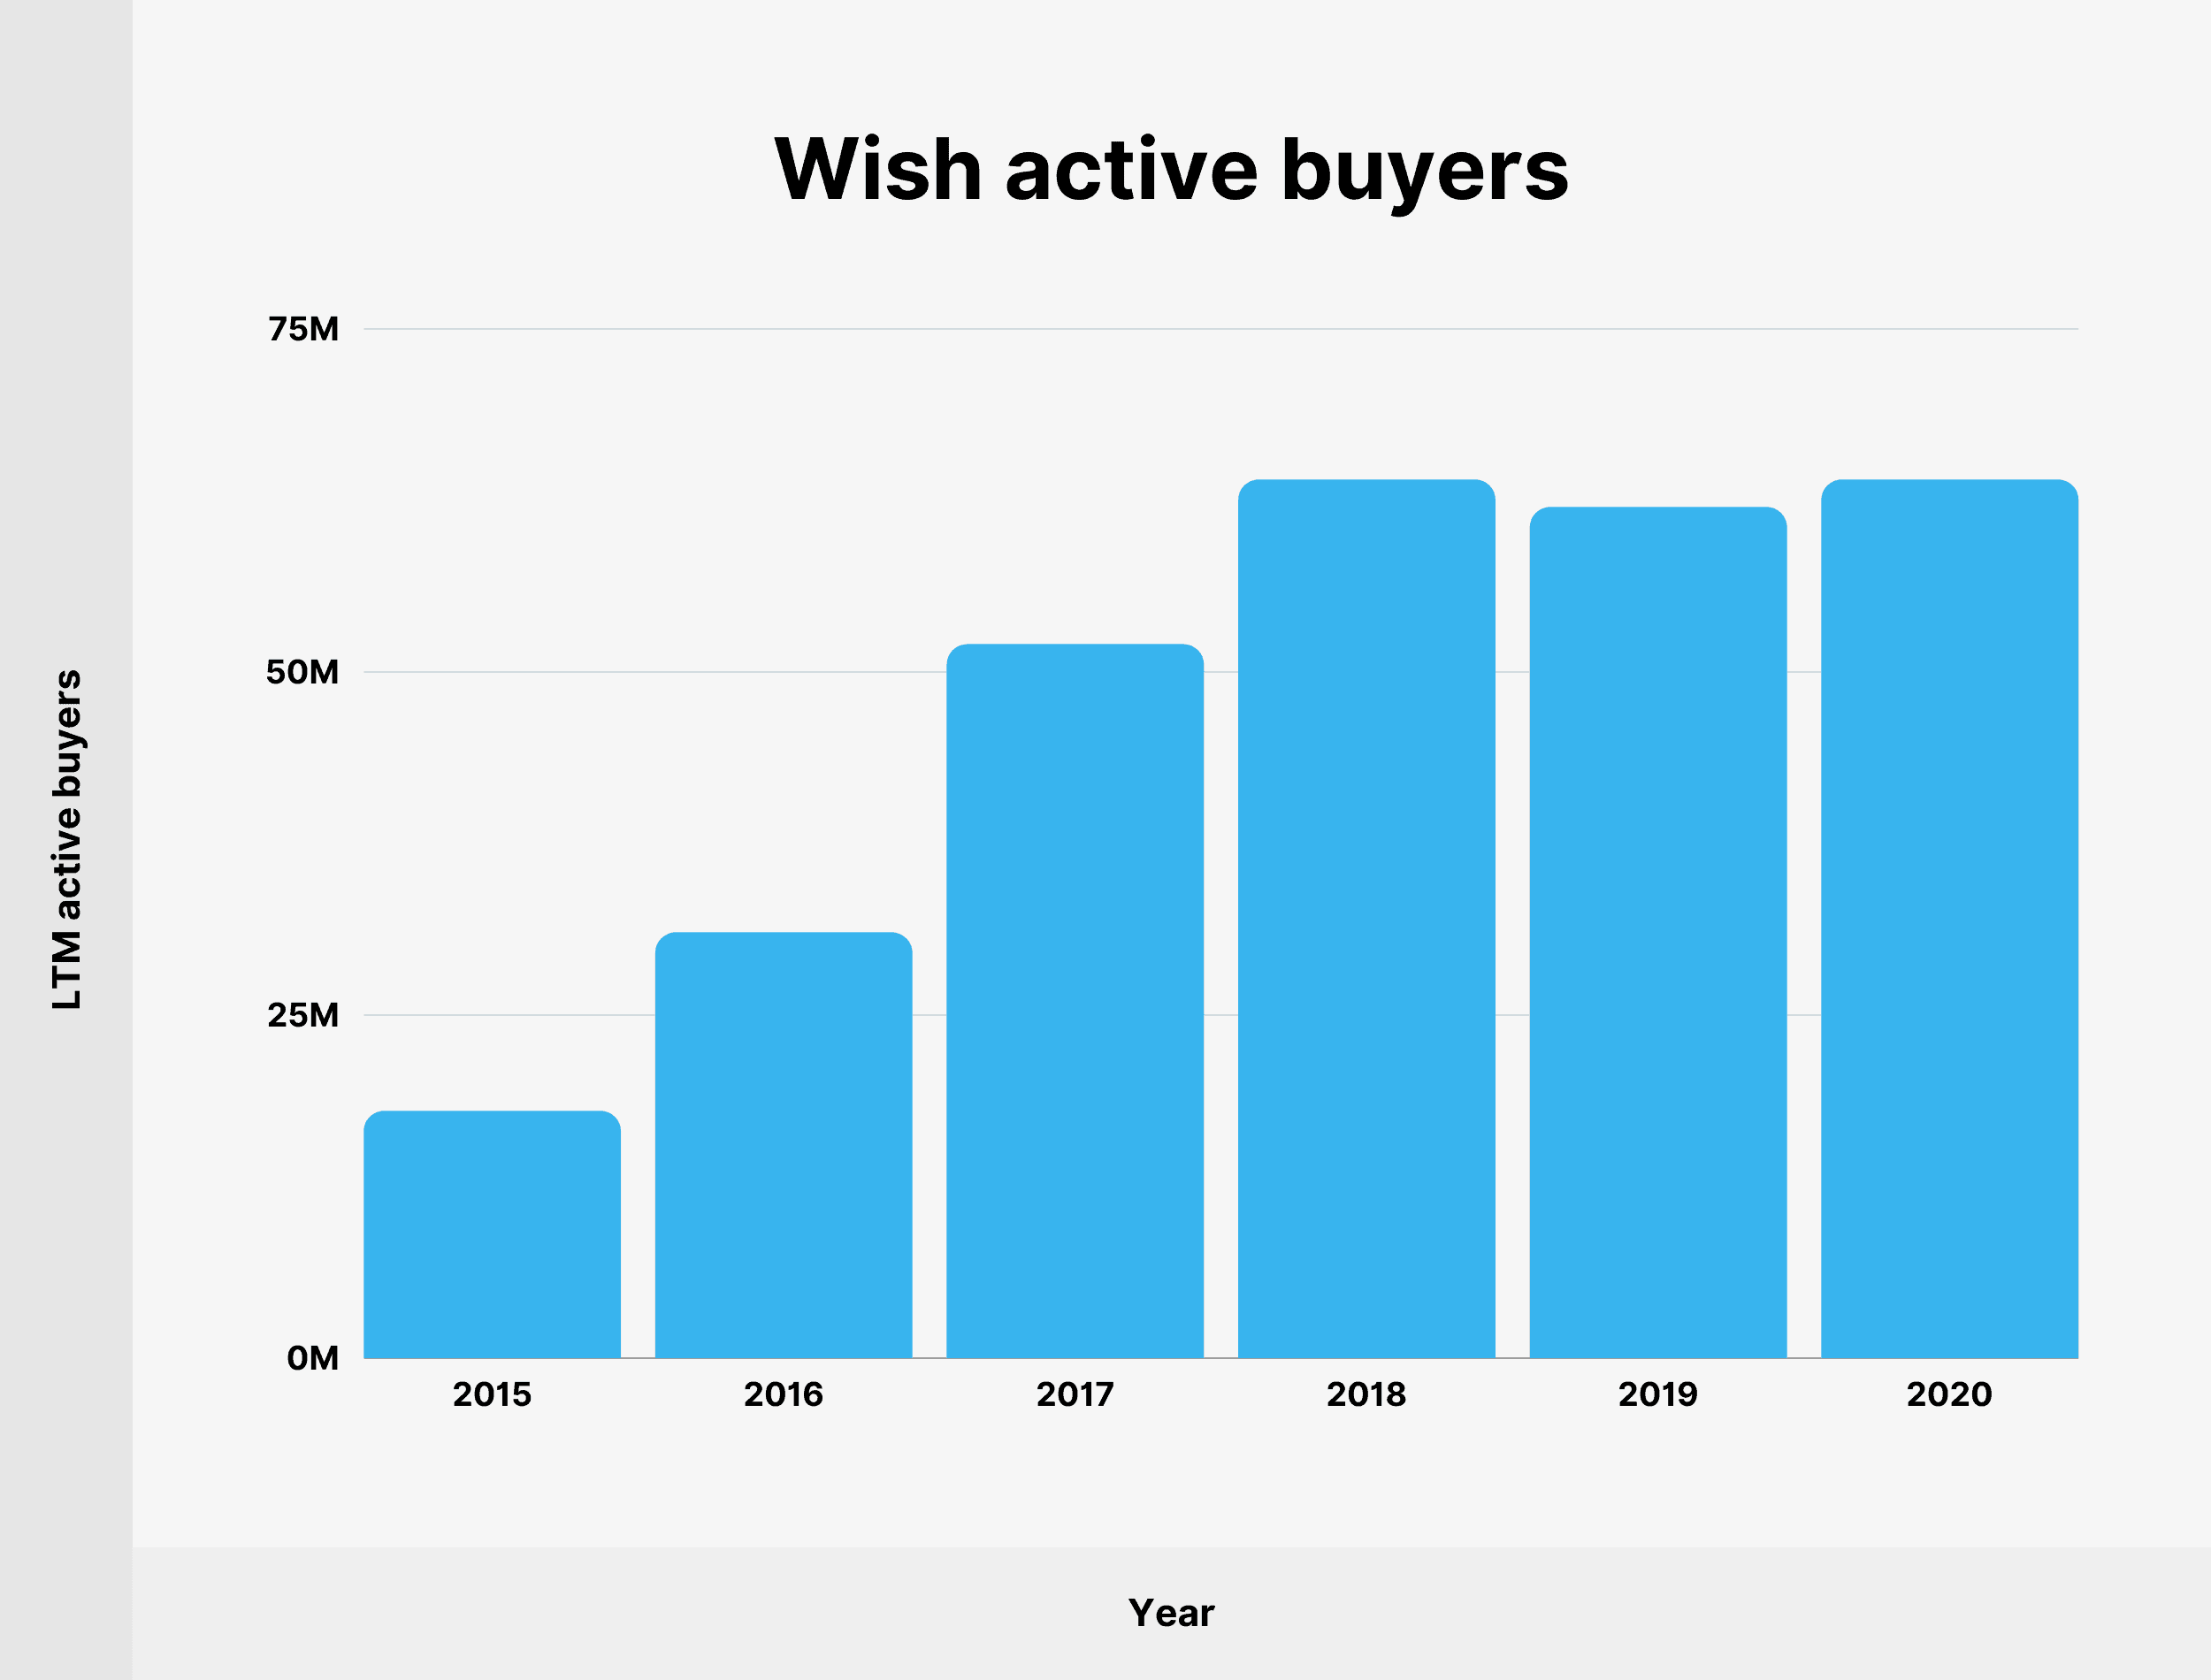 Wish active buyers